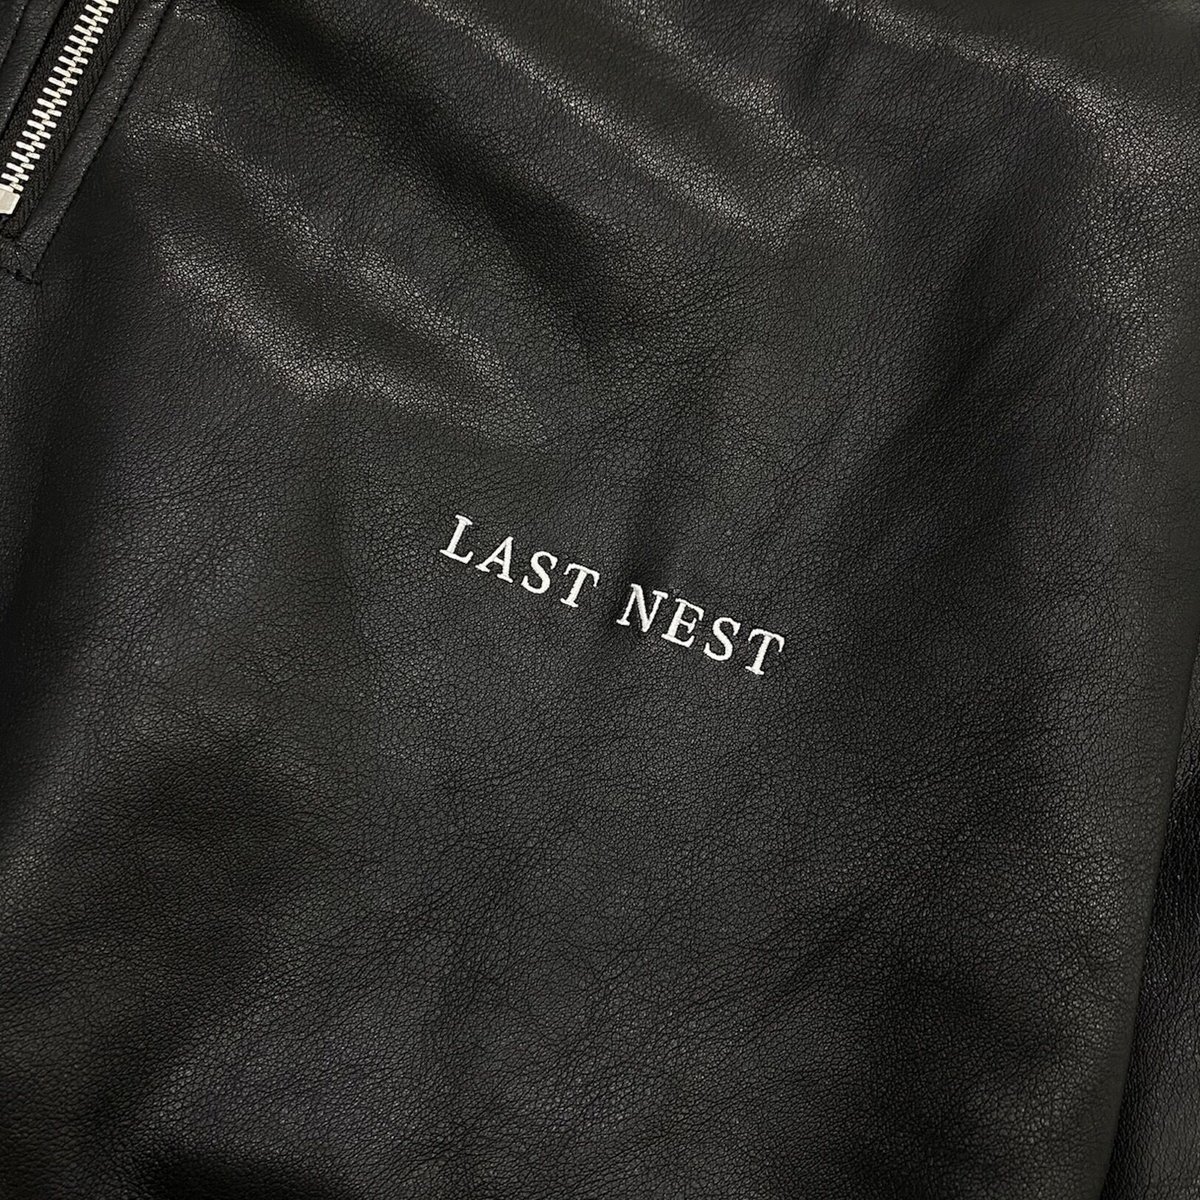 LAST NEST / leather half zip jacket